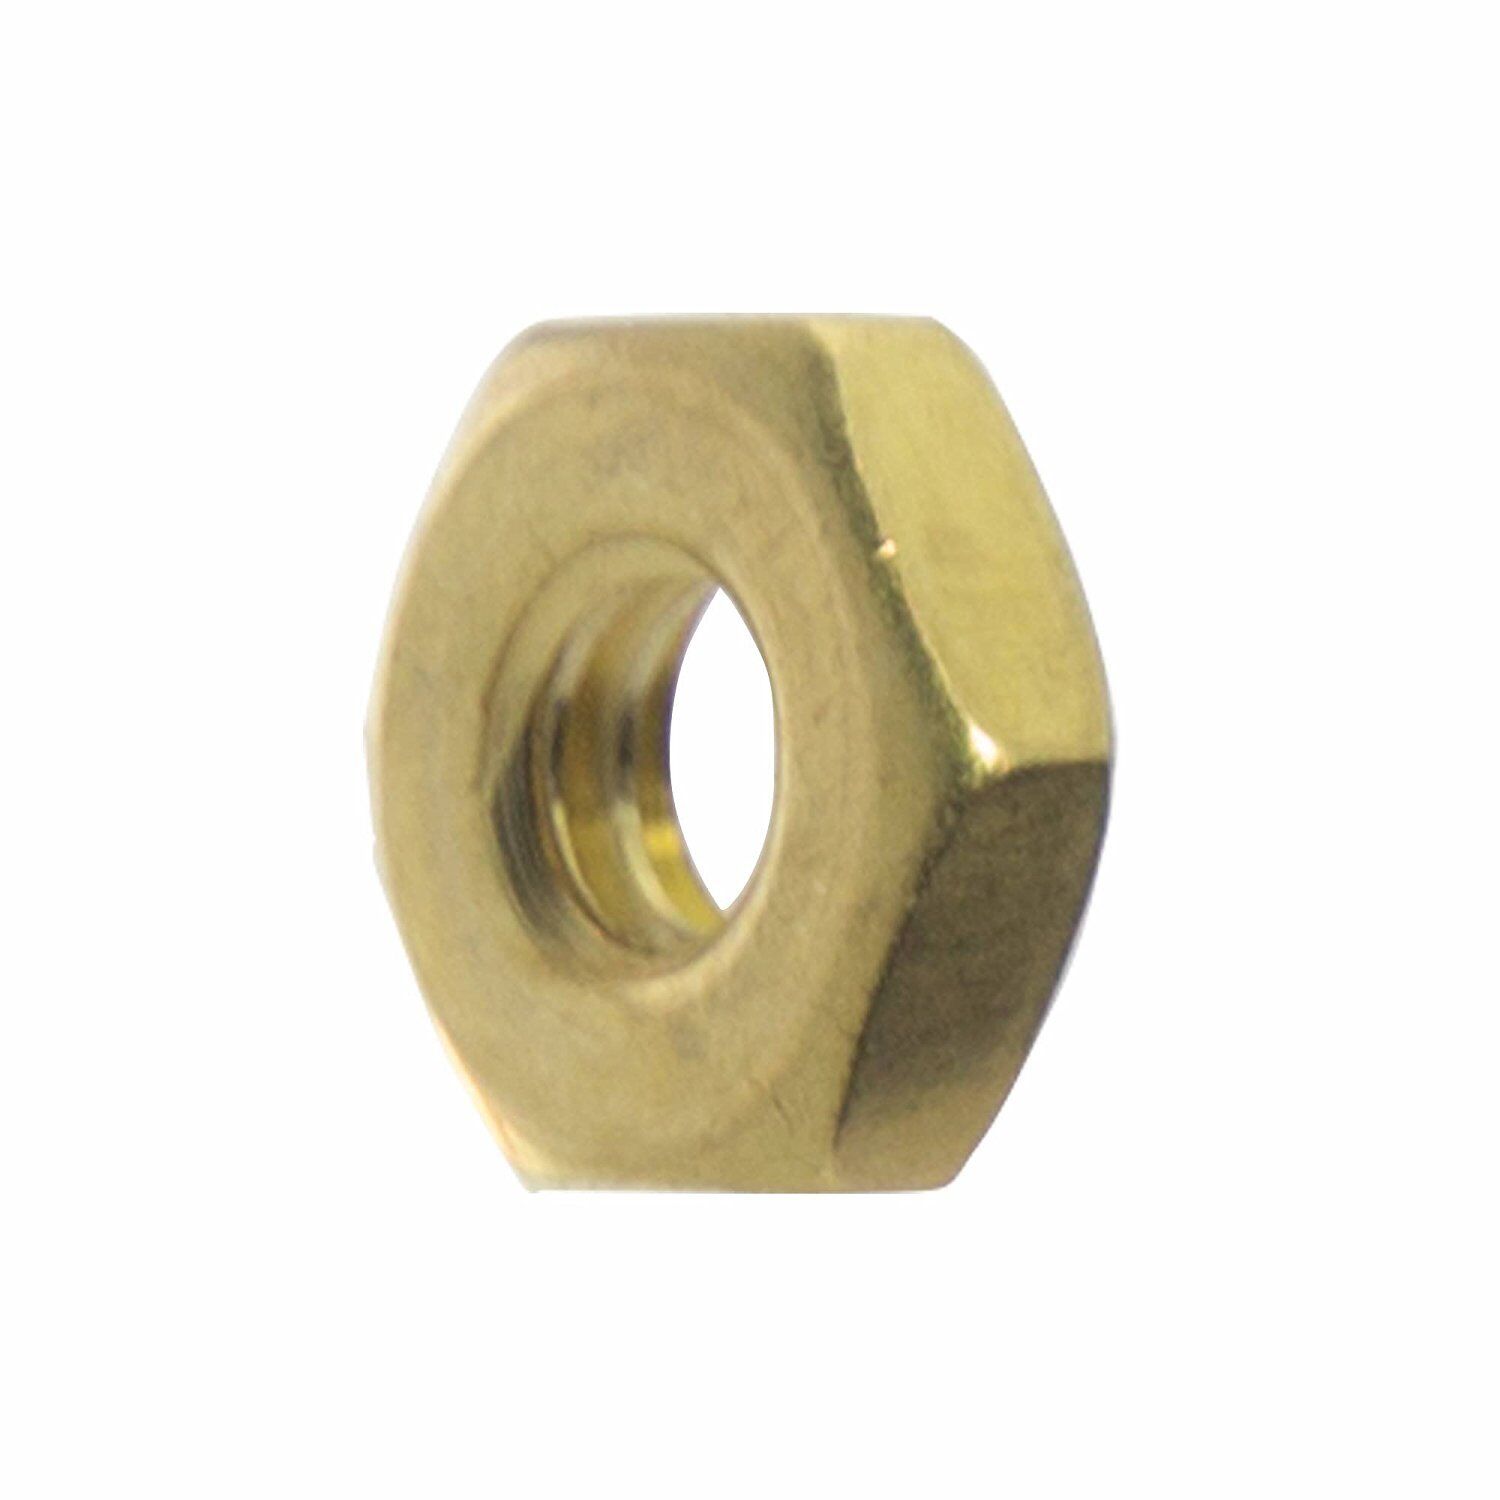 10-32 Machine Screw Hex Nuts Solid Brass Qty 50